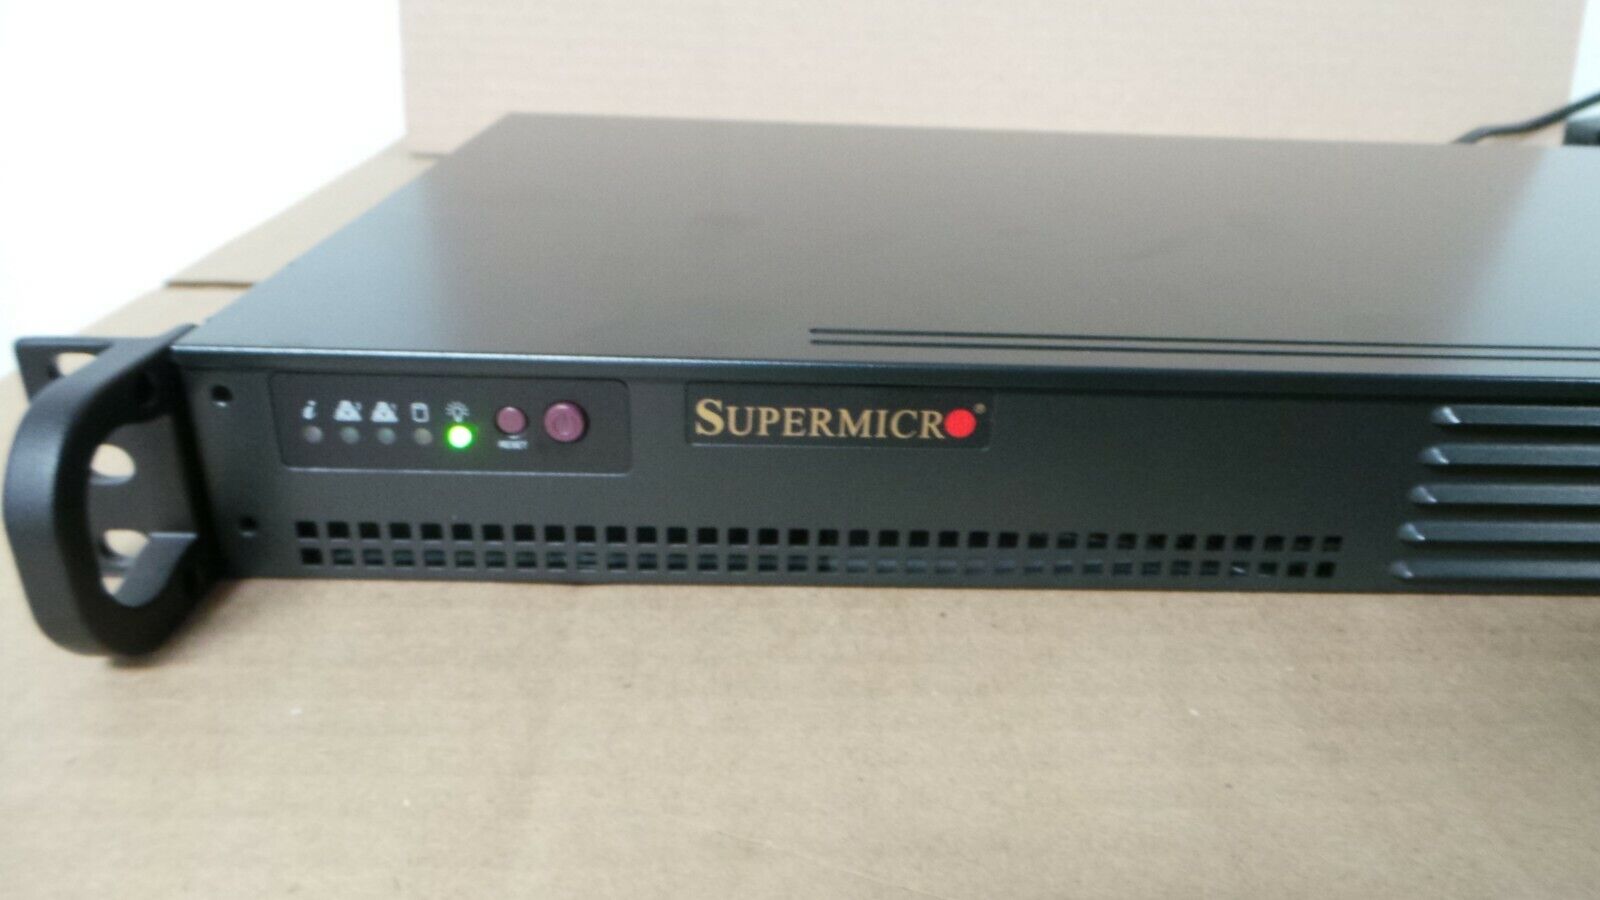 SUPERMICRO  sys-5015a  ehf ATOM  D510  4GB MEMORY  256GB SSD  FIREWALL APPLIANCE